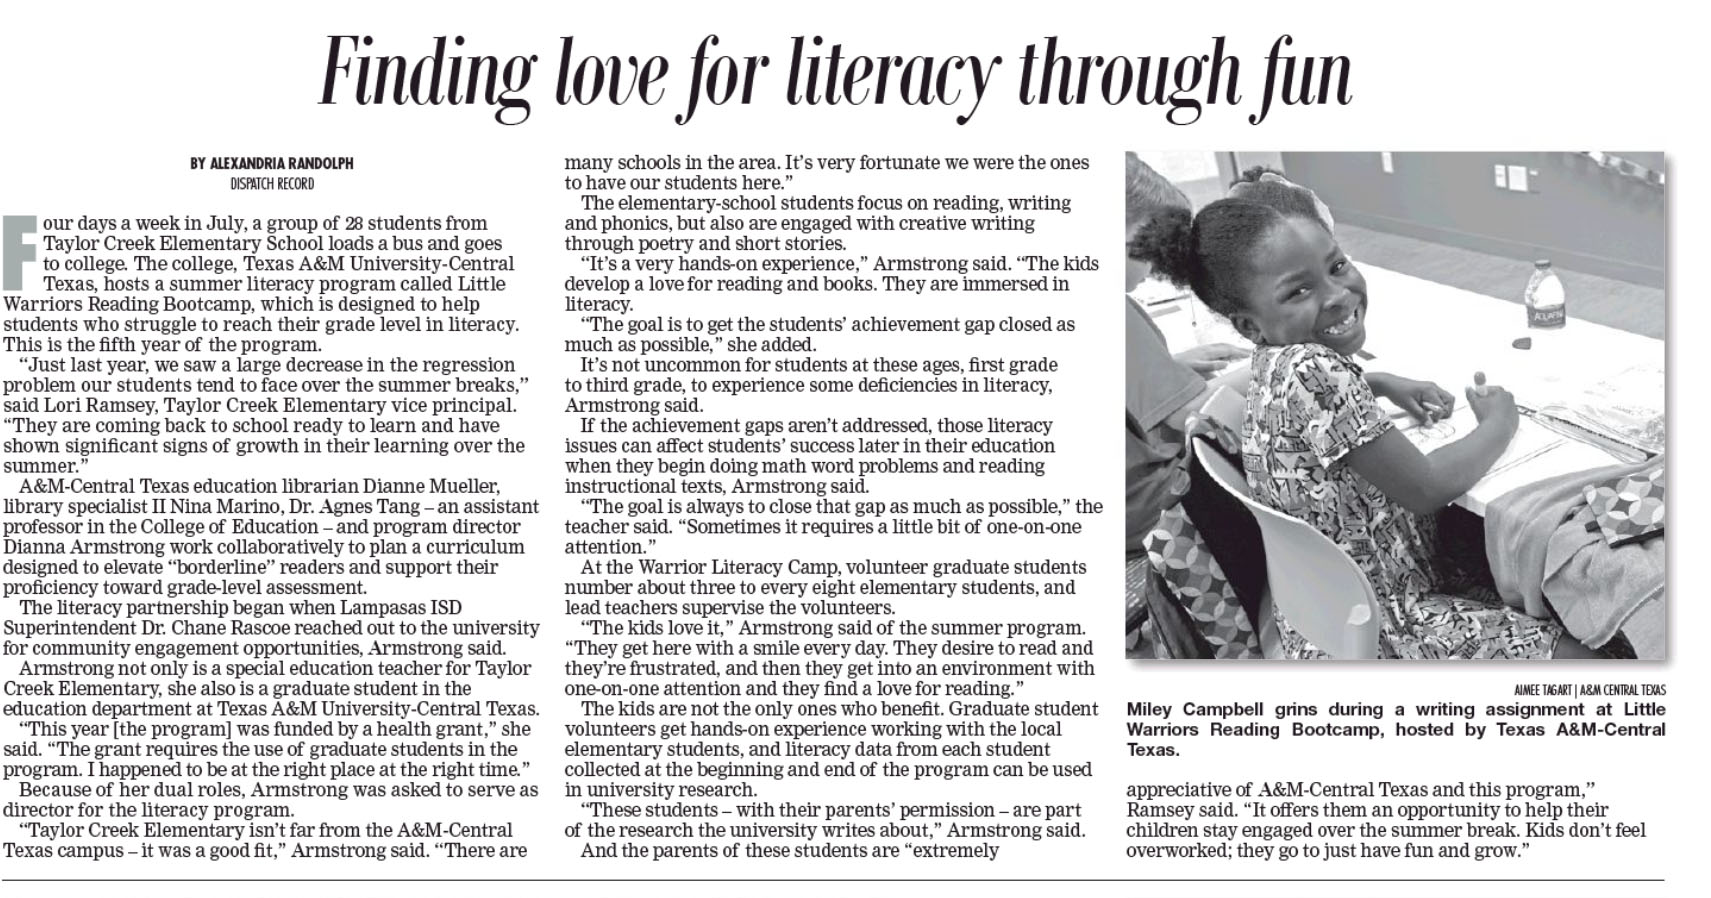 Finding love for literacy through fun